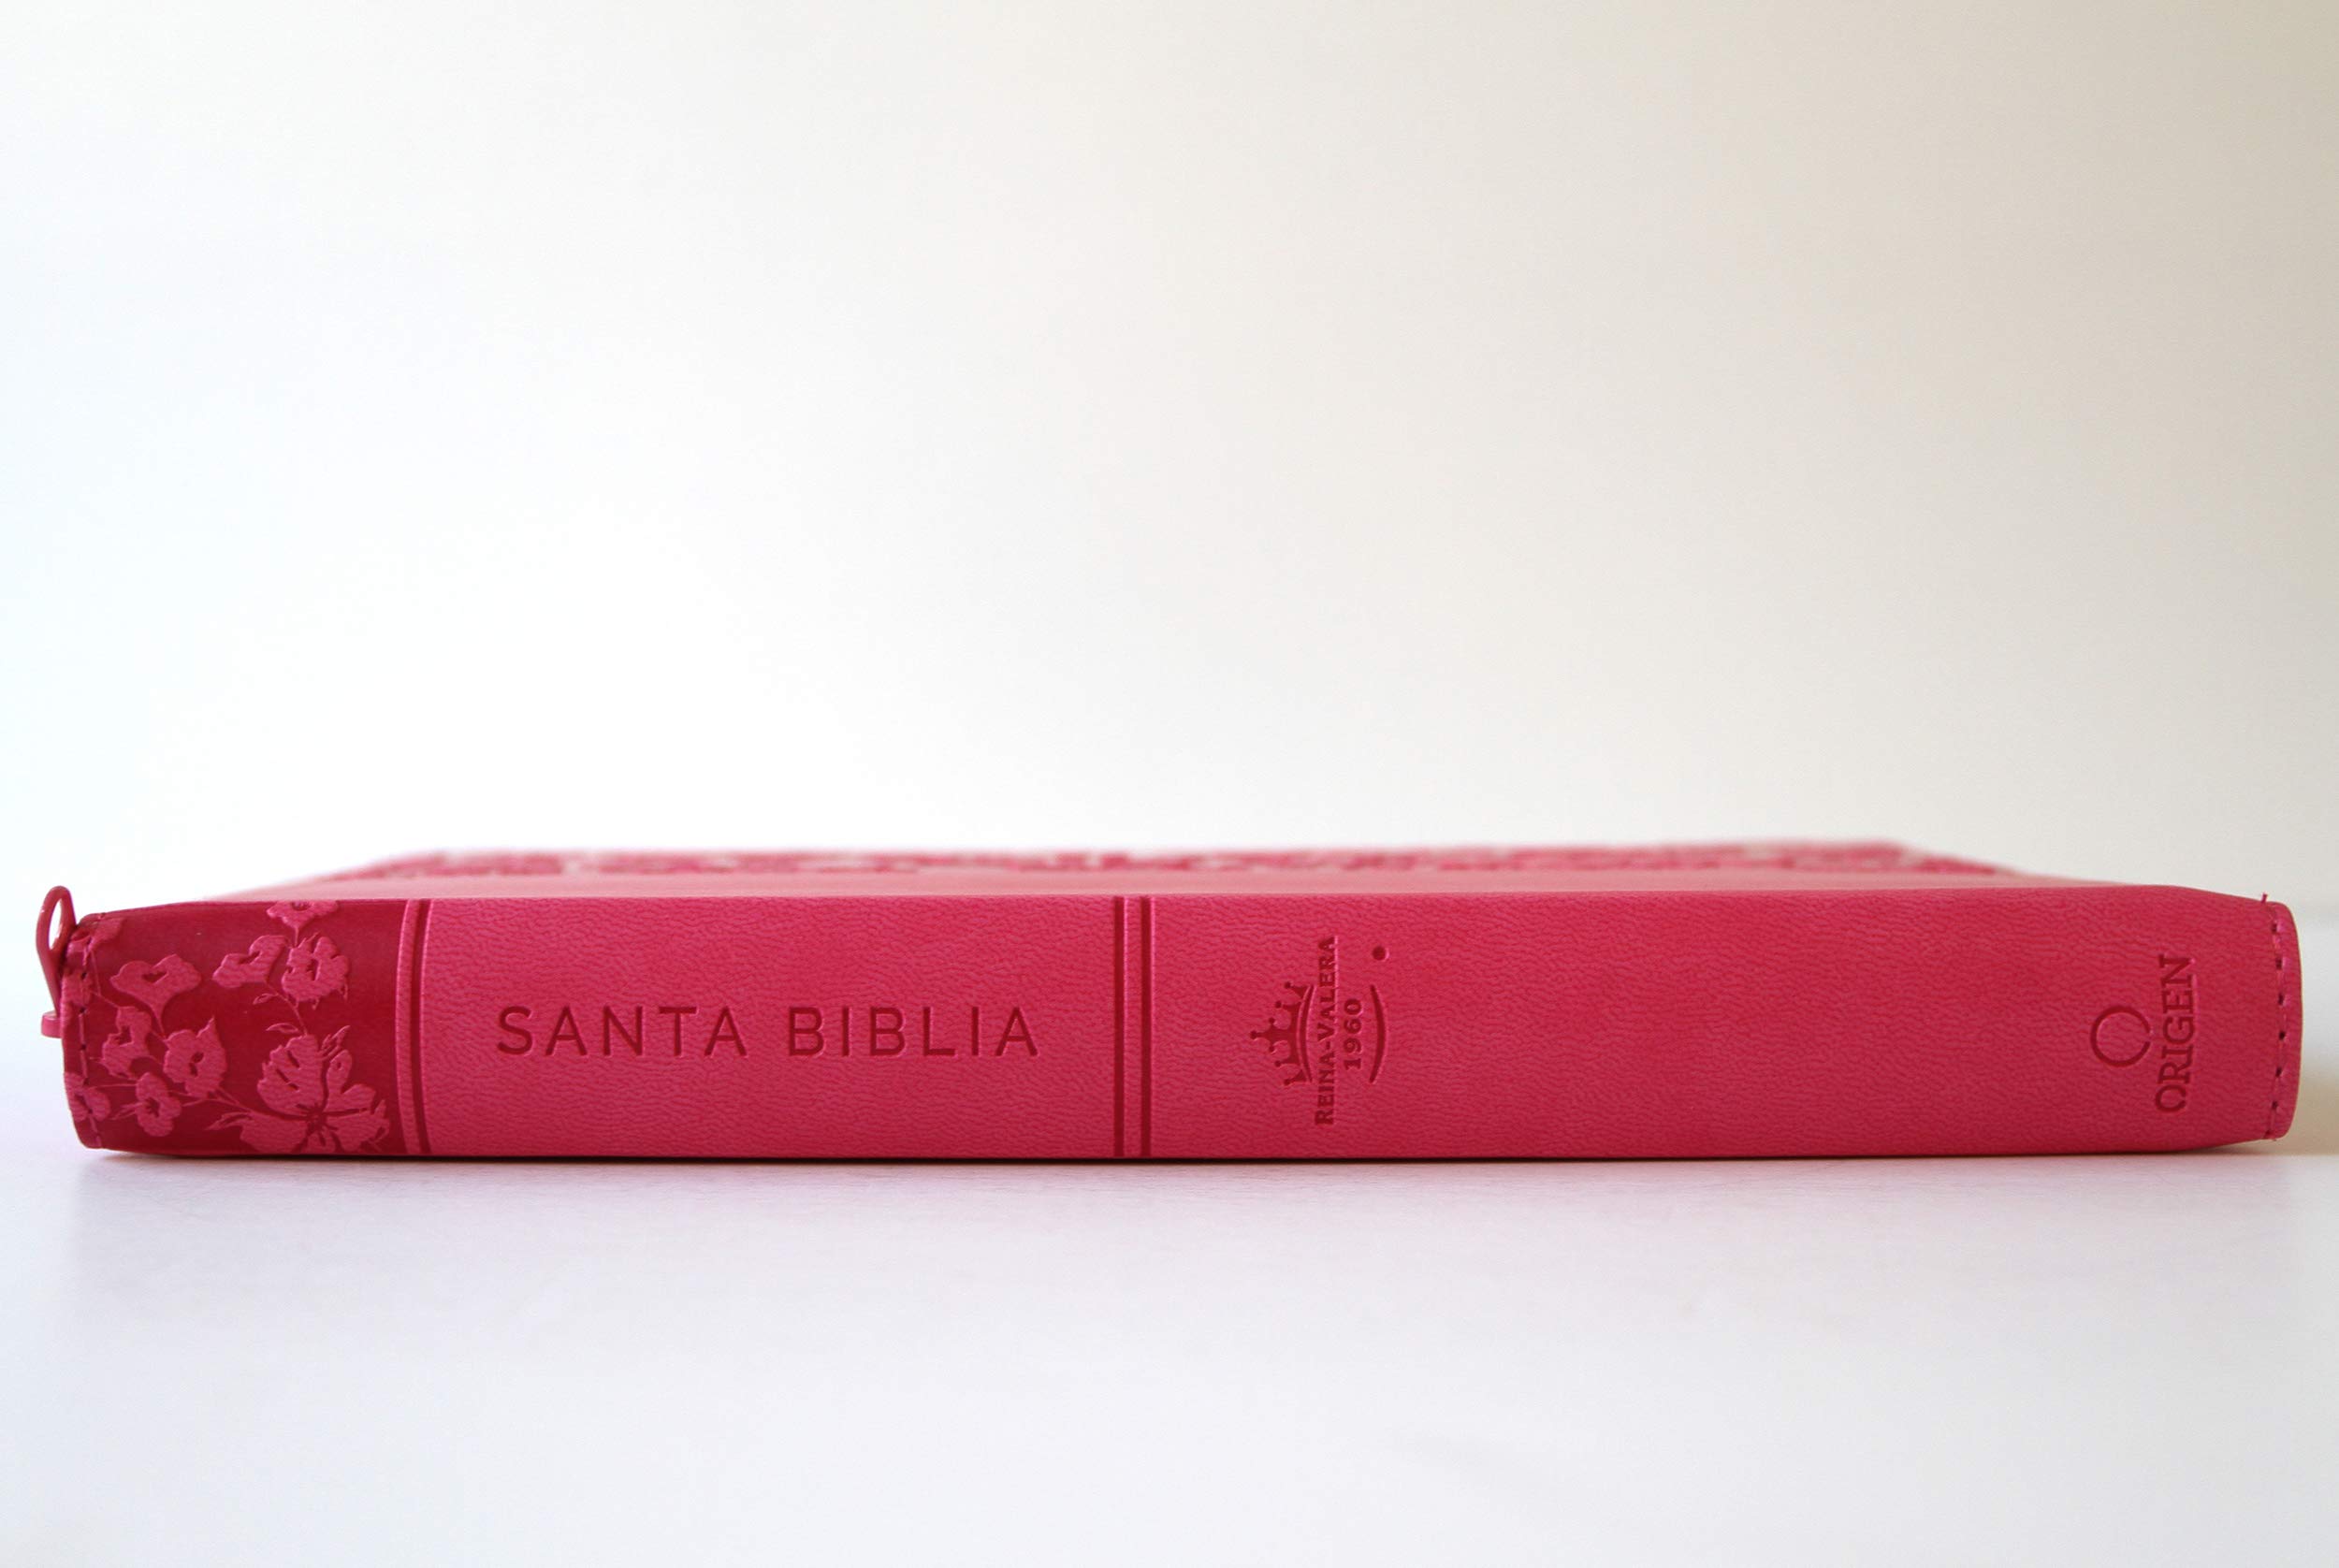 Biblia Reina Valera 1960 letra grande. Símil piel fucsia, cremallera, índice, ma nual / Spanish Bible RVR 1960. Handy Size, Large Print, Leathersoft